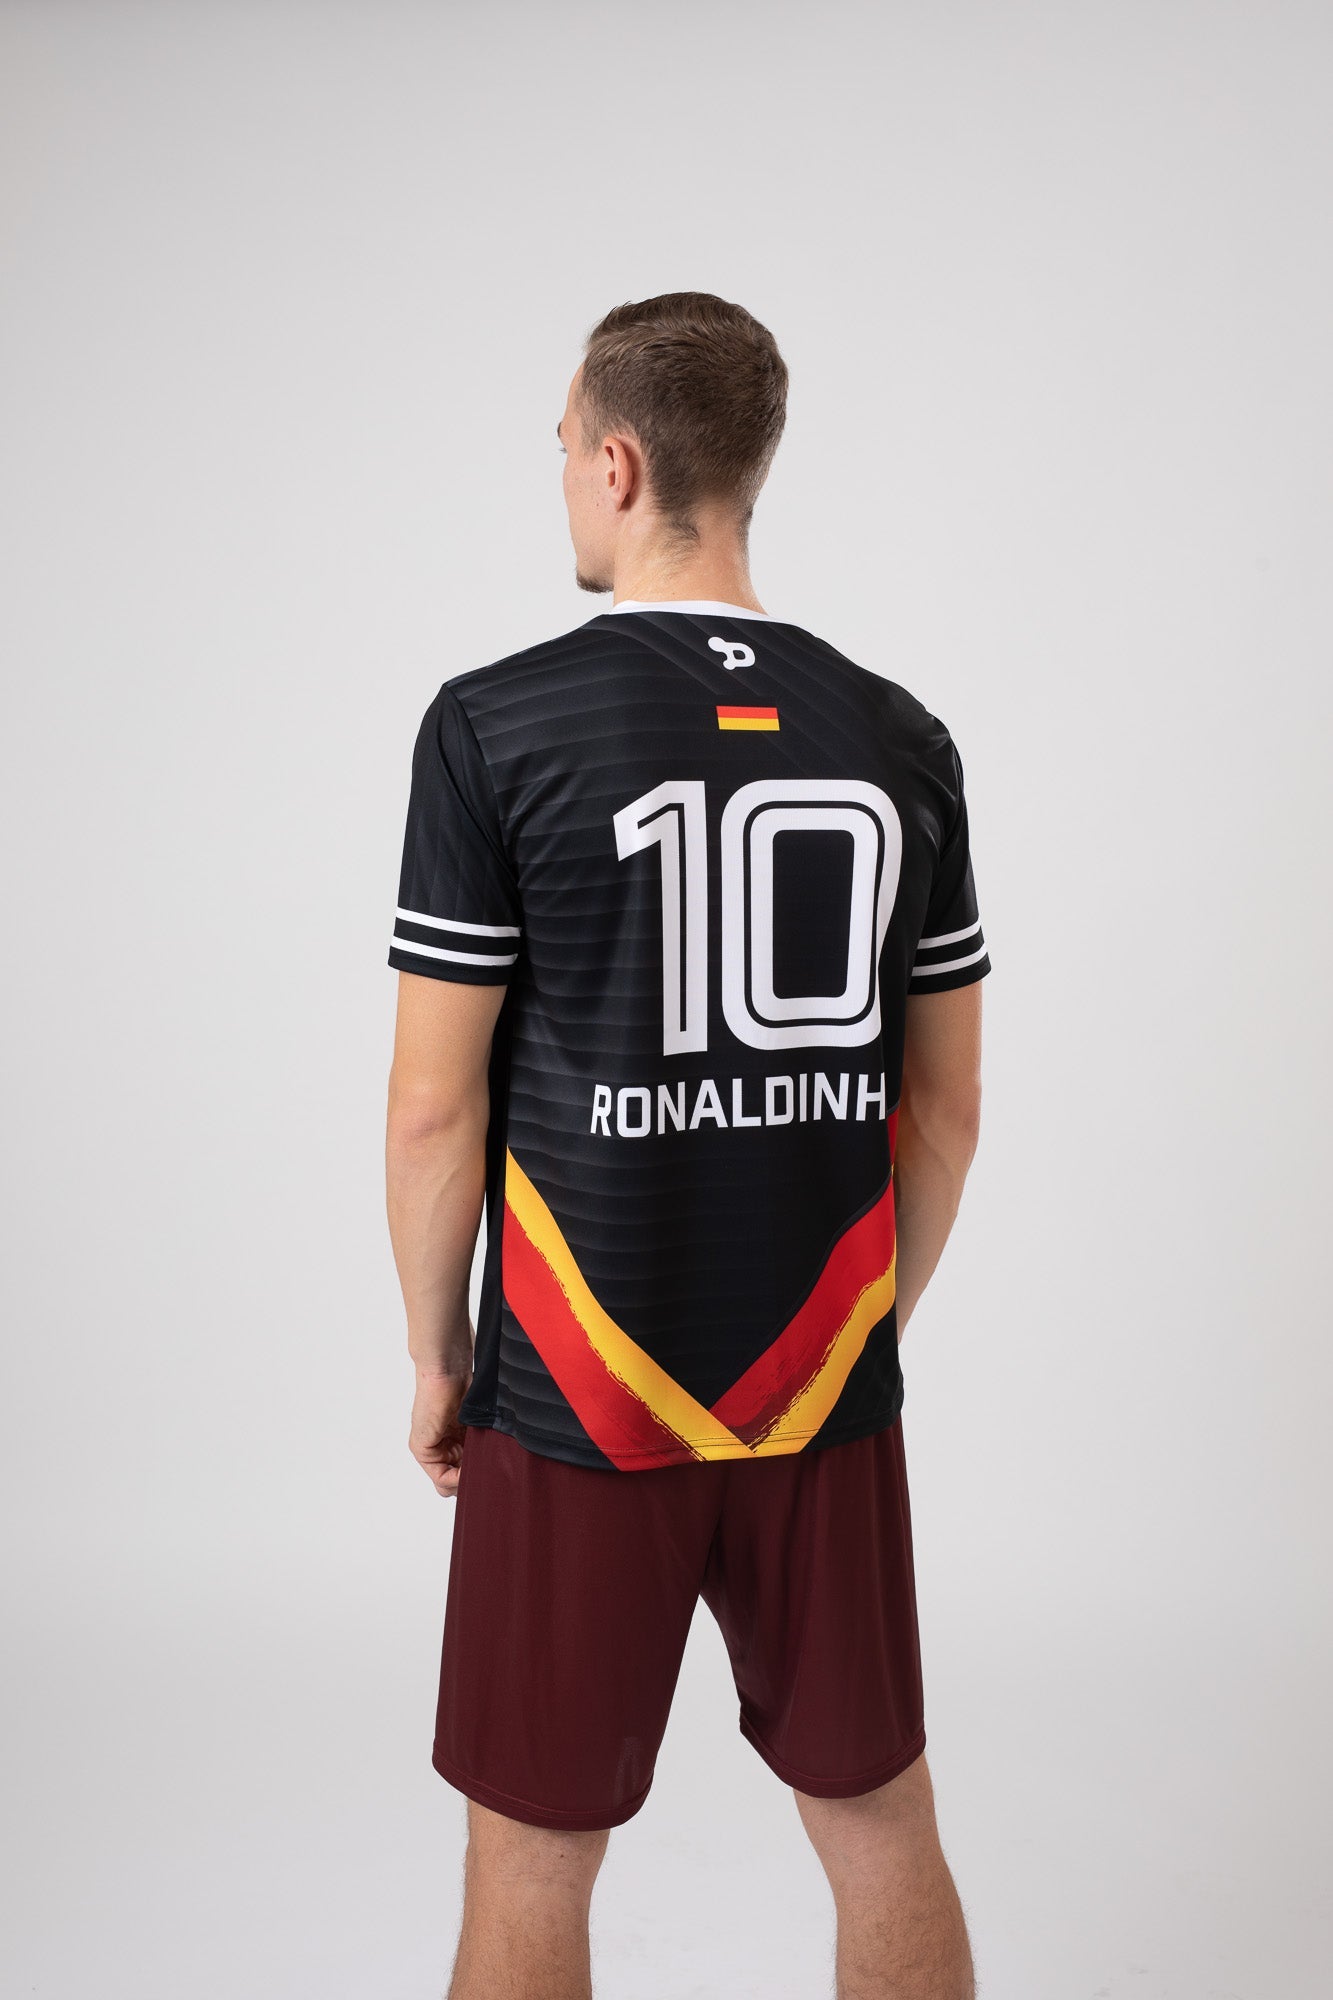 Ronaldinho Germany Jersey/Camisa Replica Wholesale